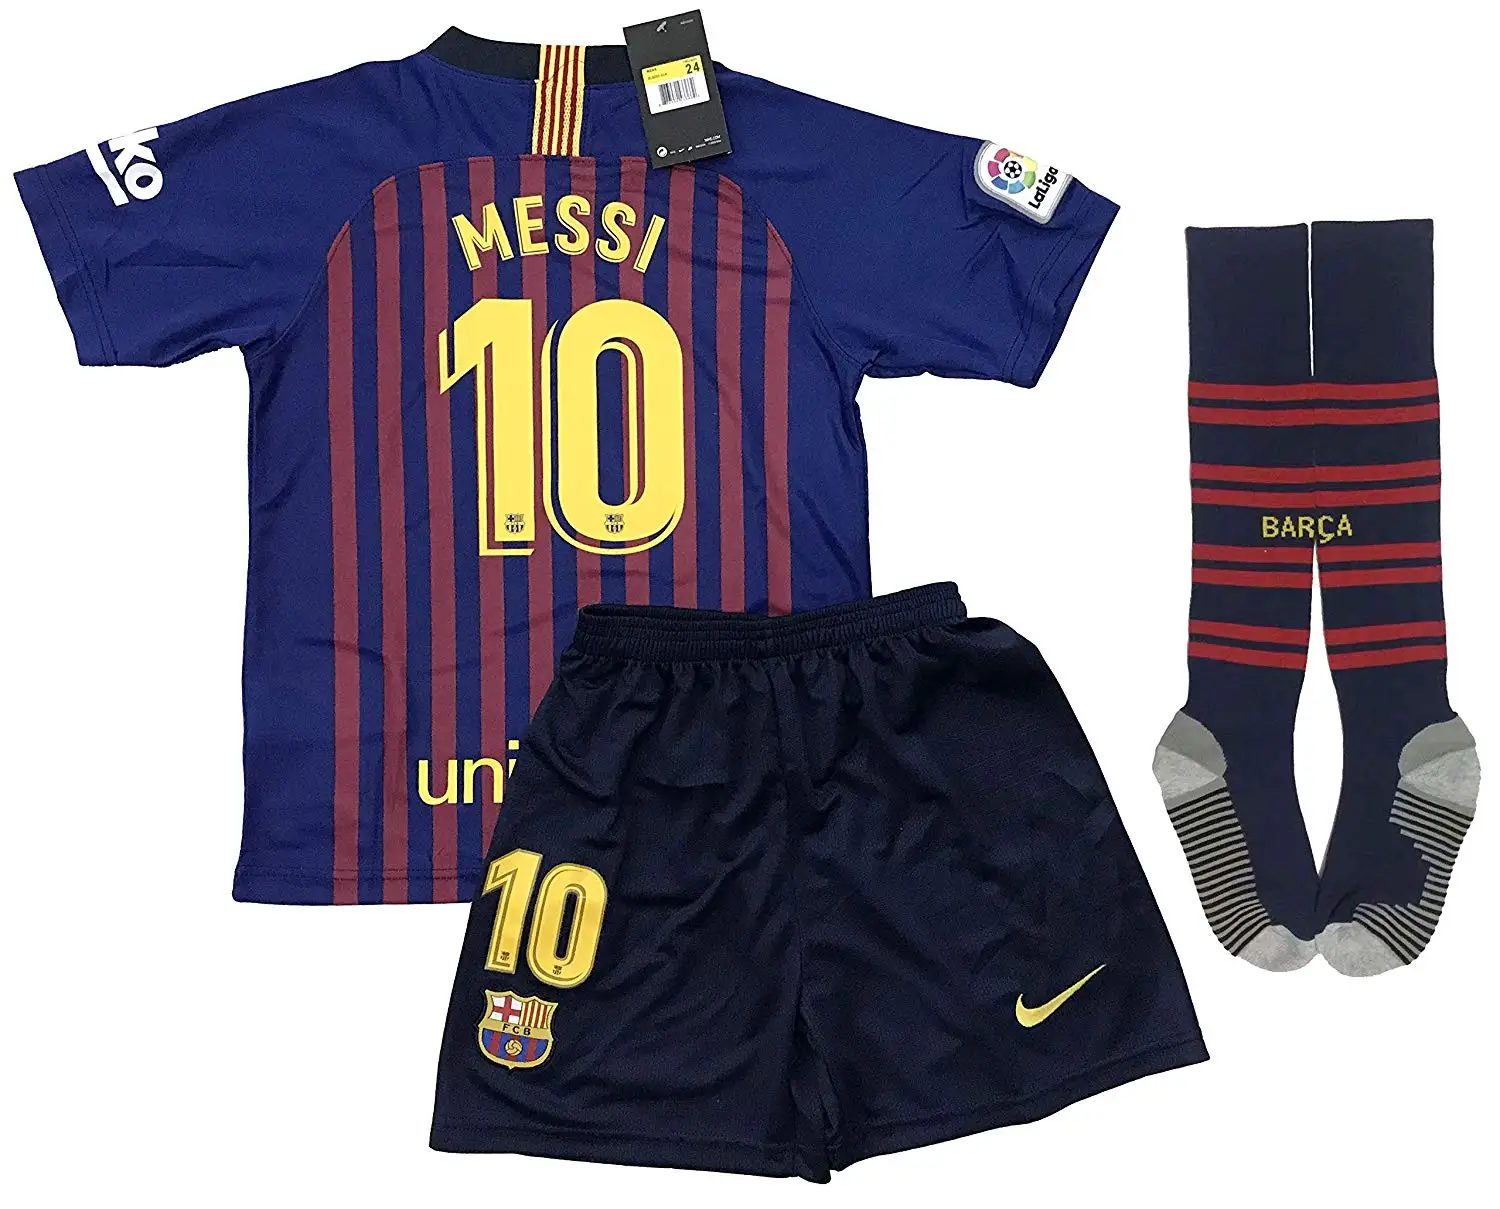 Wiflsur Mens Messi Jerseys 2018//19 Adult Soccer Athletic 10 Barcelona Shorts Home